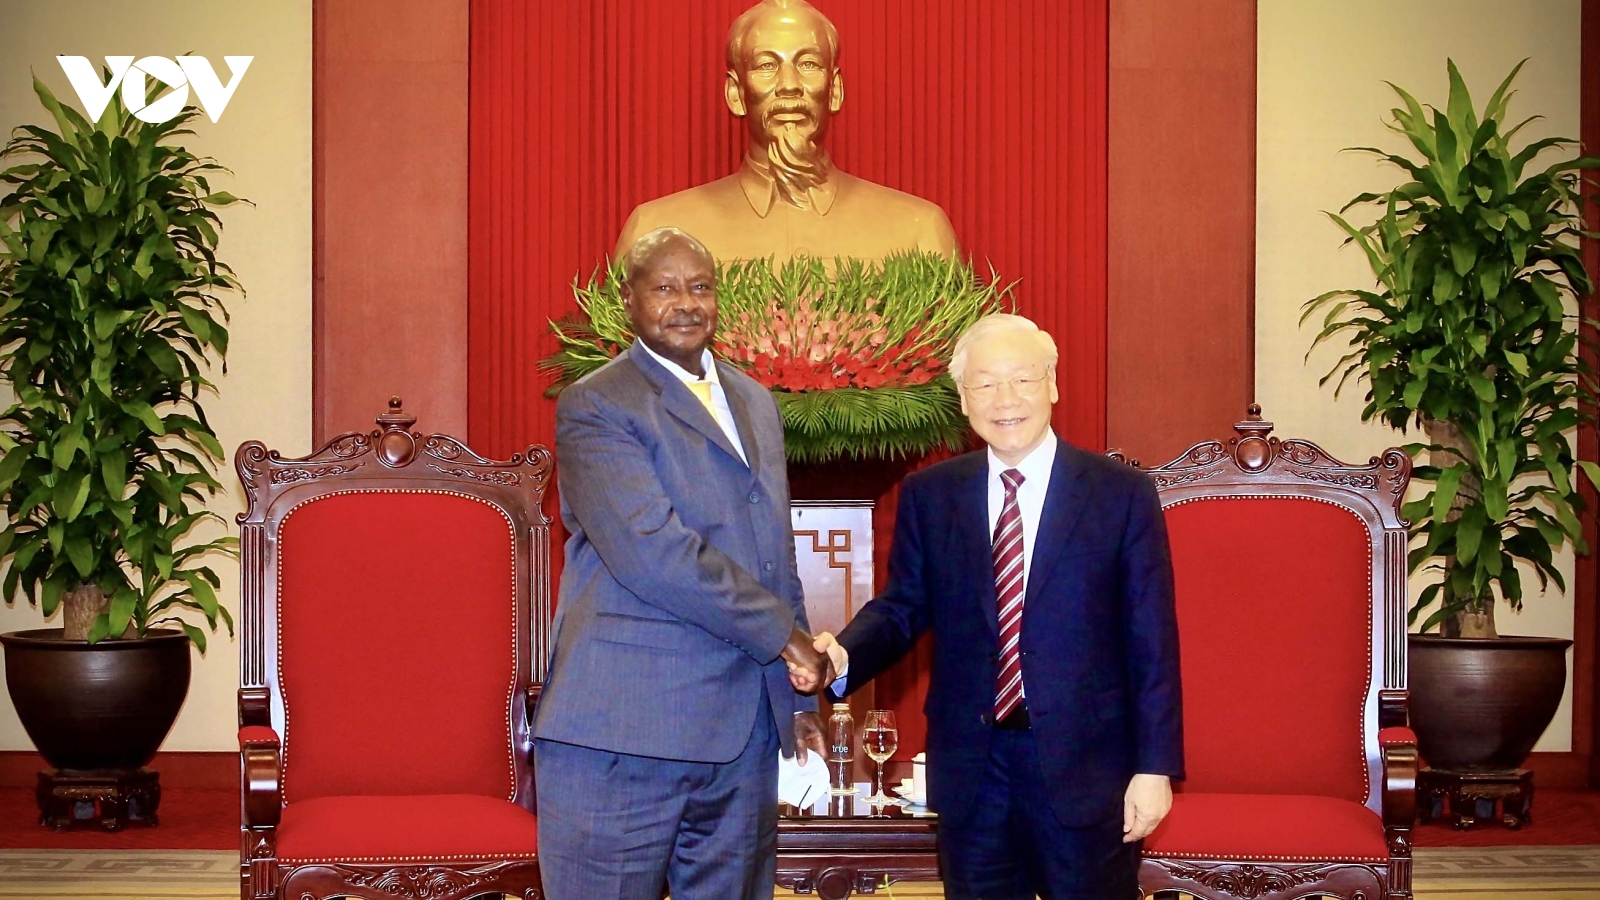 Party leader welcomes Ugandan President in Hanoi